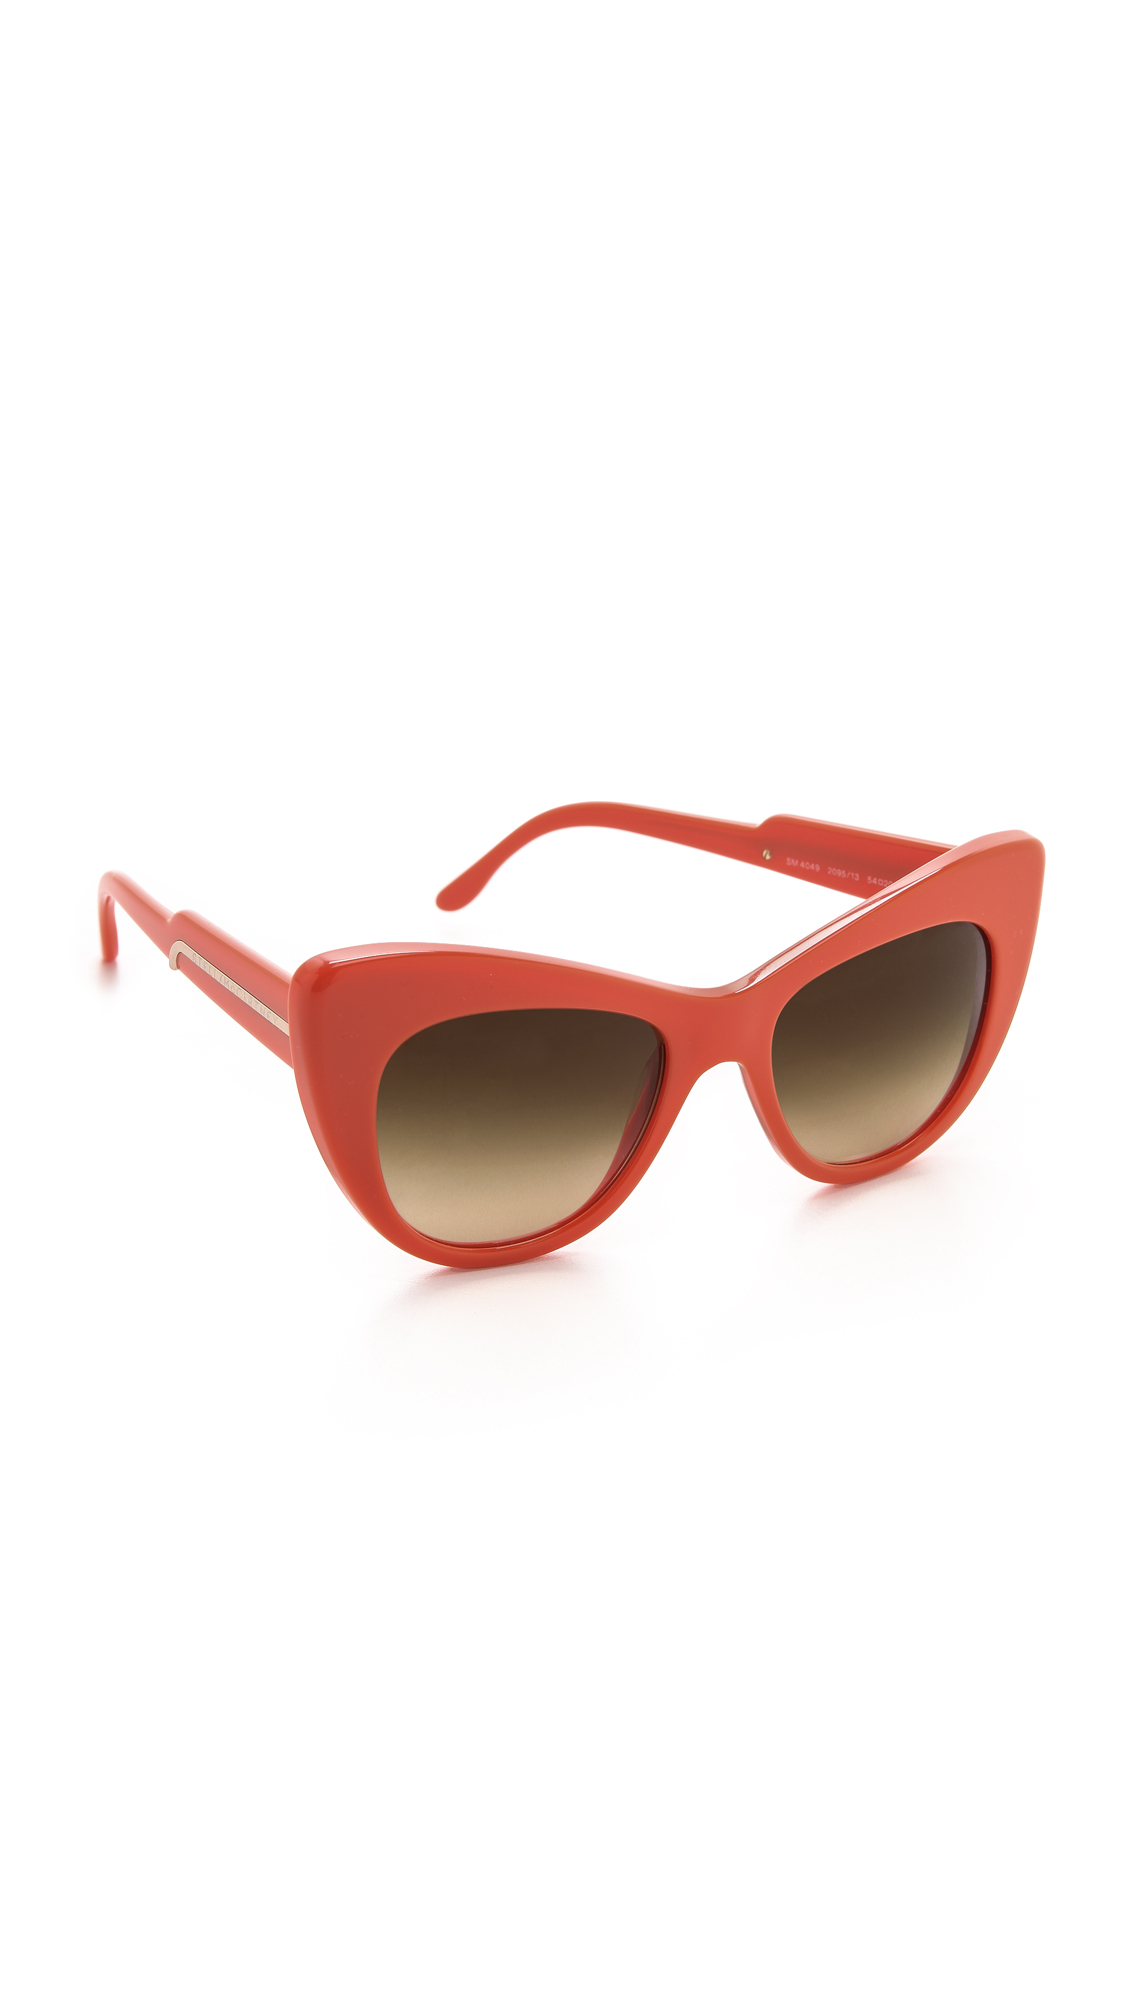 Lyst - Stella Mccartney Cat Eye Sunglasses Bright Orangered in Red